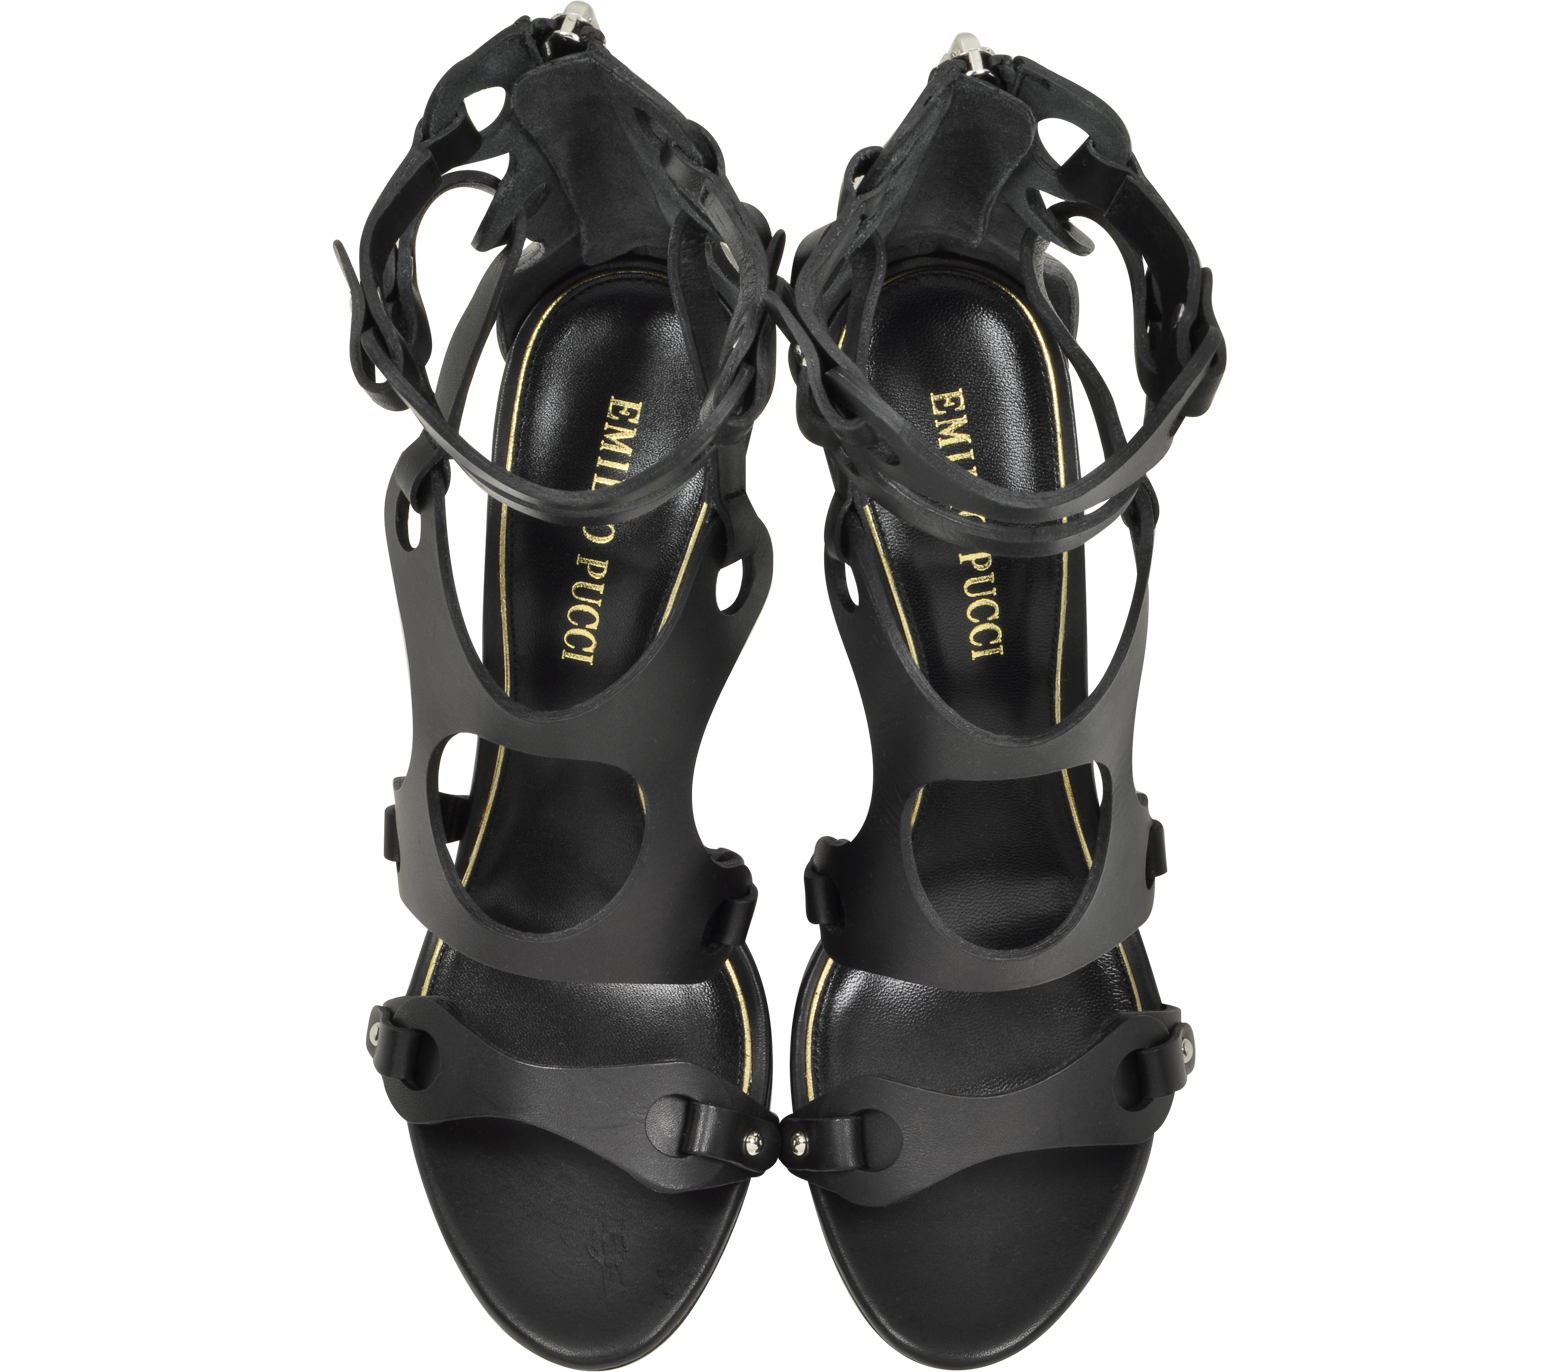 Emilio Pucci Black Leather Sandal w/Plexiglass Heel 37 IT/EU at FORZIERI